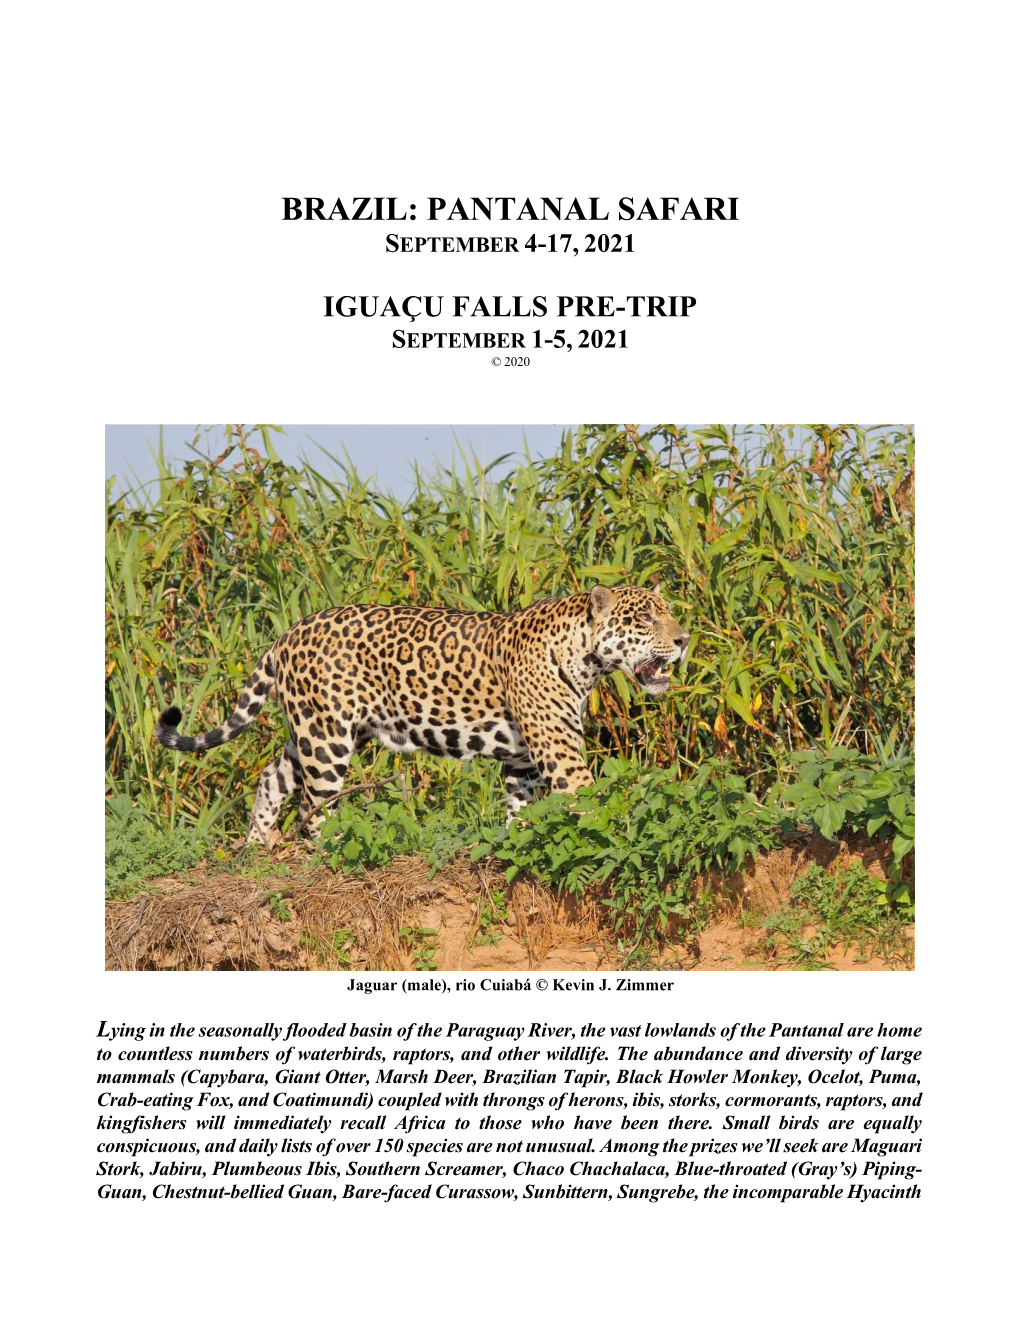 Brazil: Pantanal Safari September 4-17, 2021